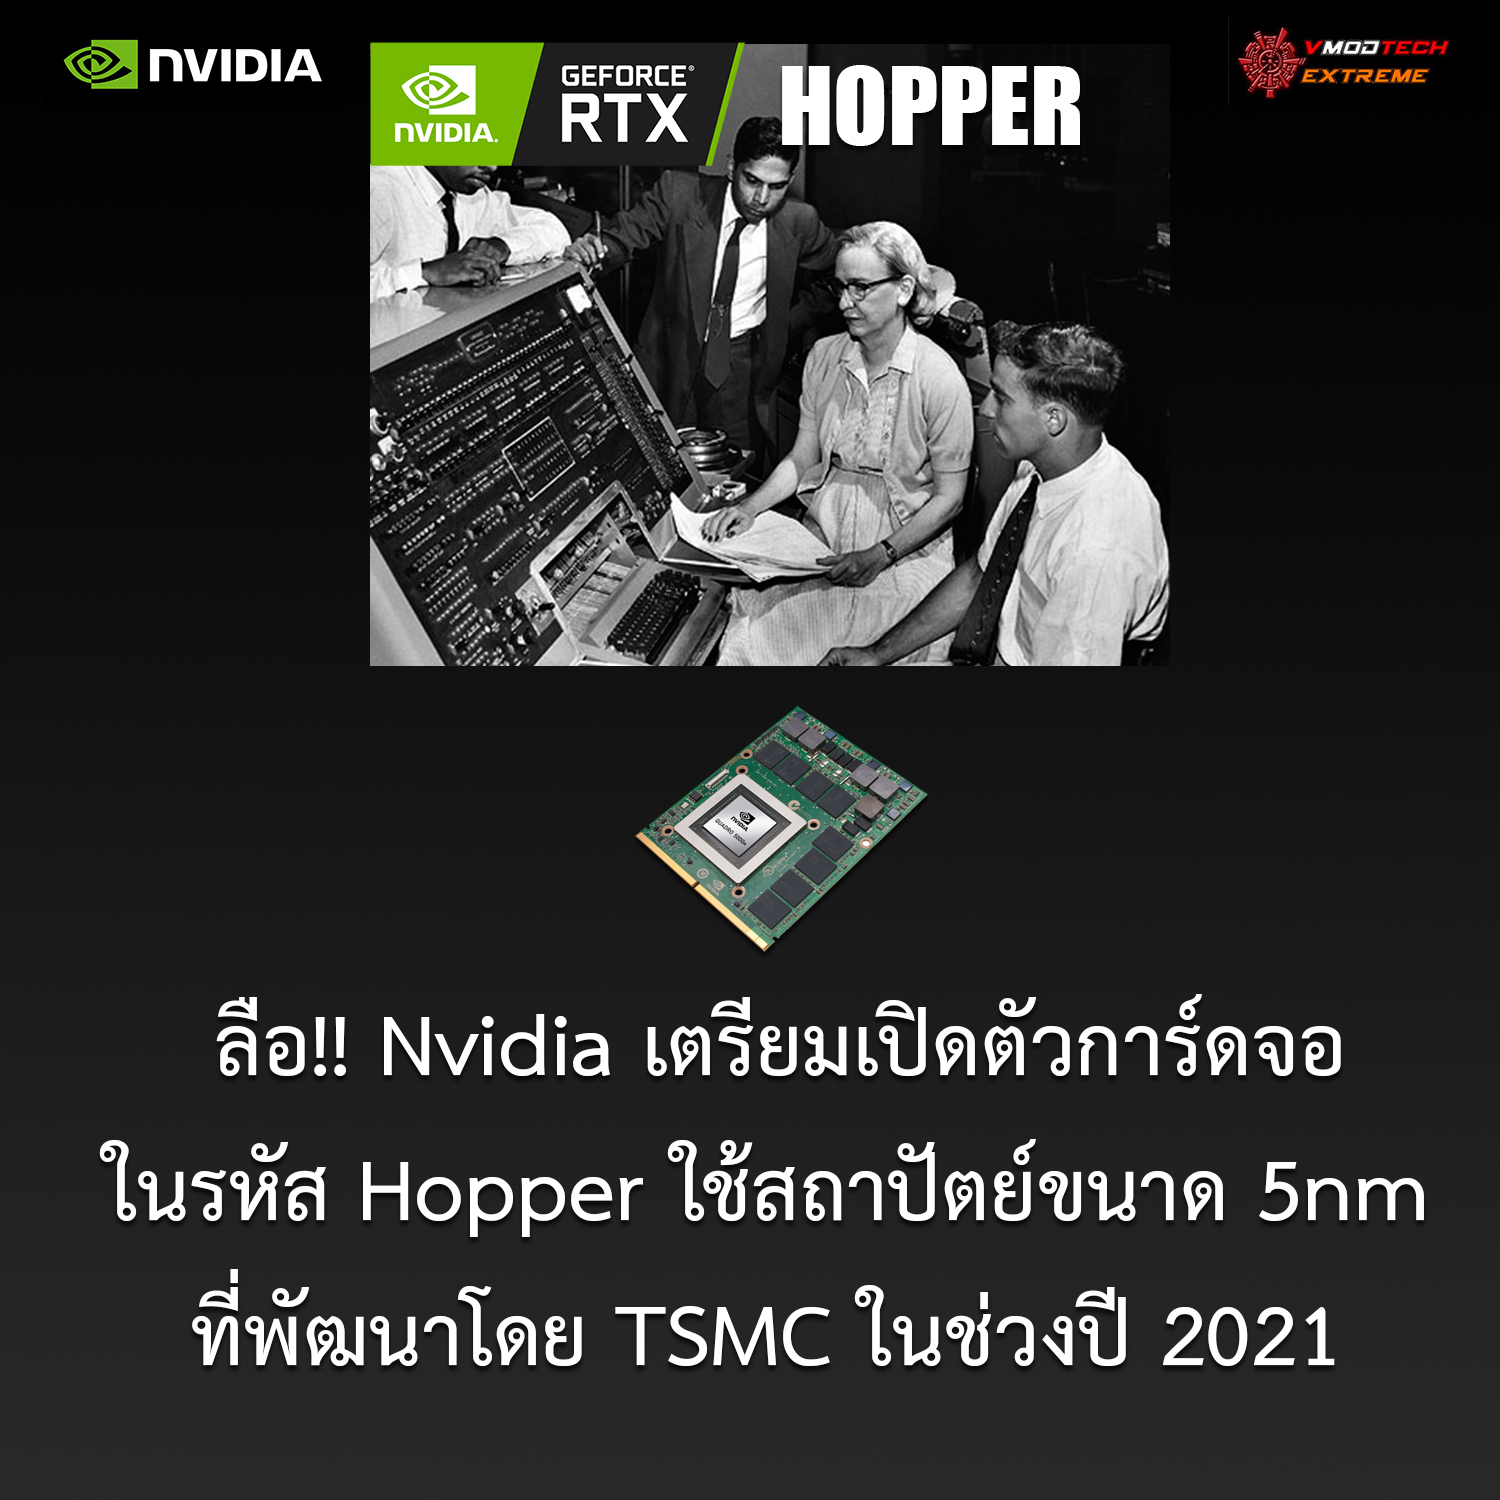 nvidia hopper 5nm 2021 ลือ!! Nvidia เตรียมเปิดตัวการ์ดจอในรหัส Hopper ใช้สถาปัตย์ขนาด 5nm ที่พัฒนาโดย TSMC ในช่วงปี 2021 